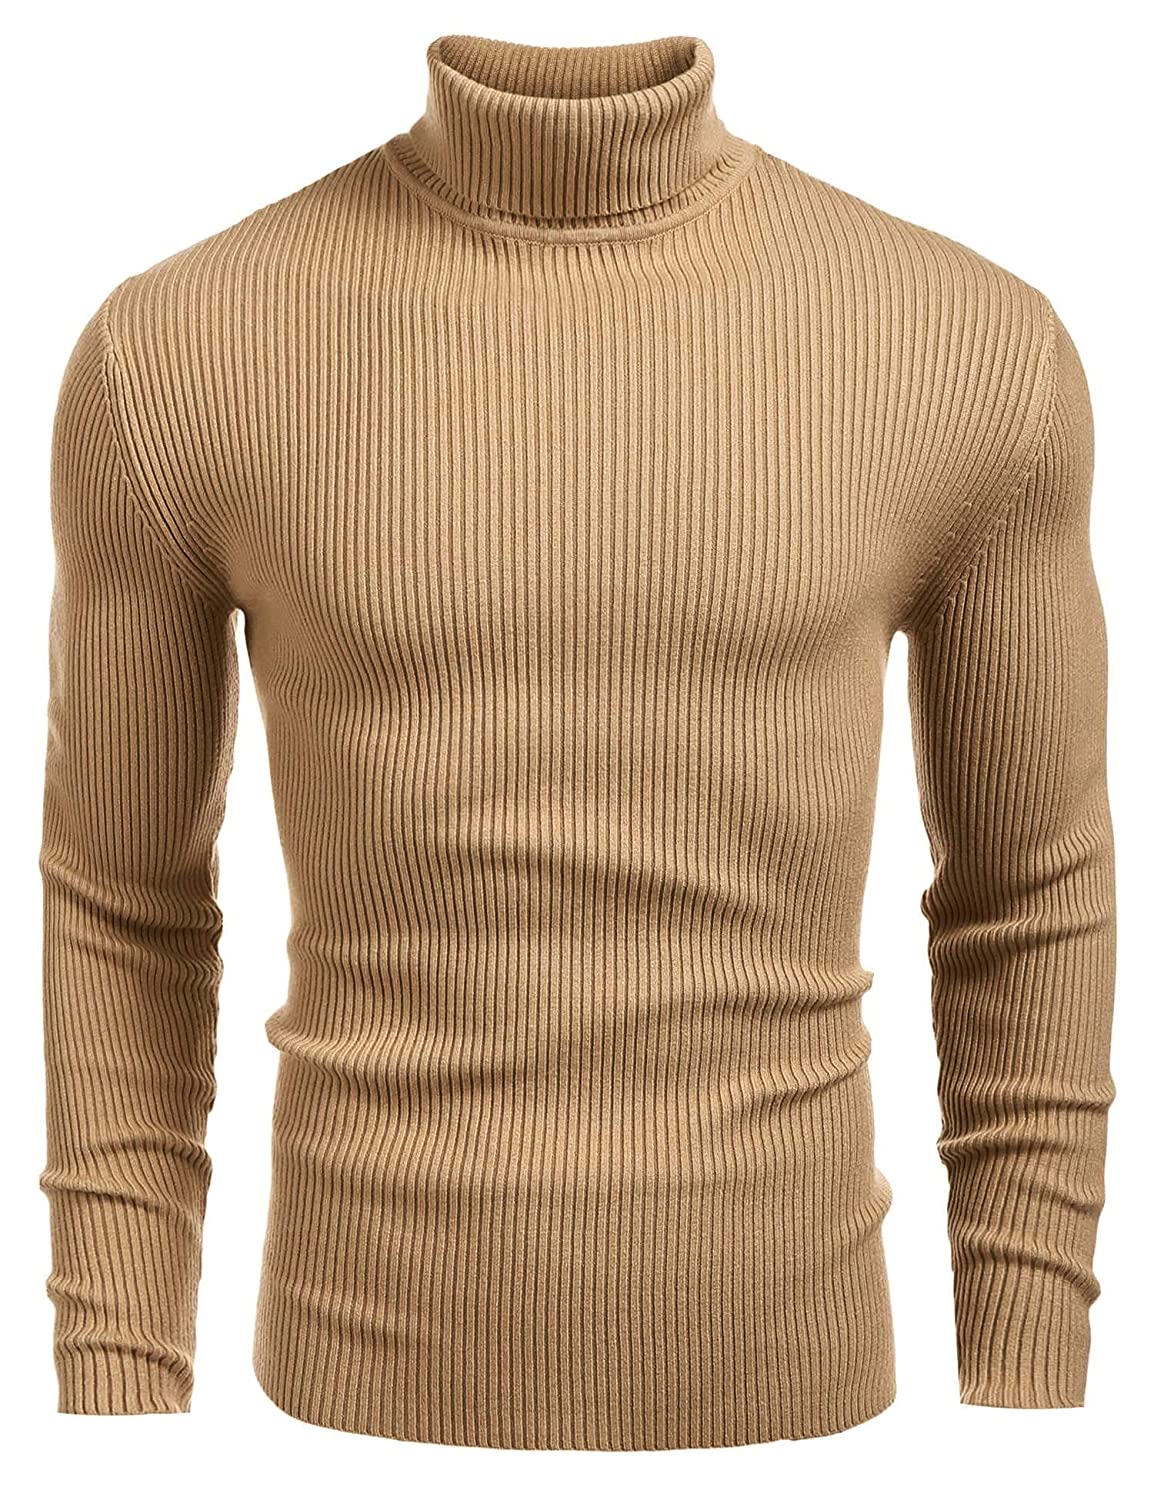 Men's Cotton Turtle Neck Sweater